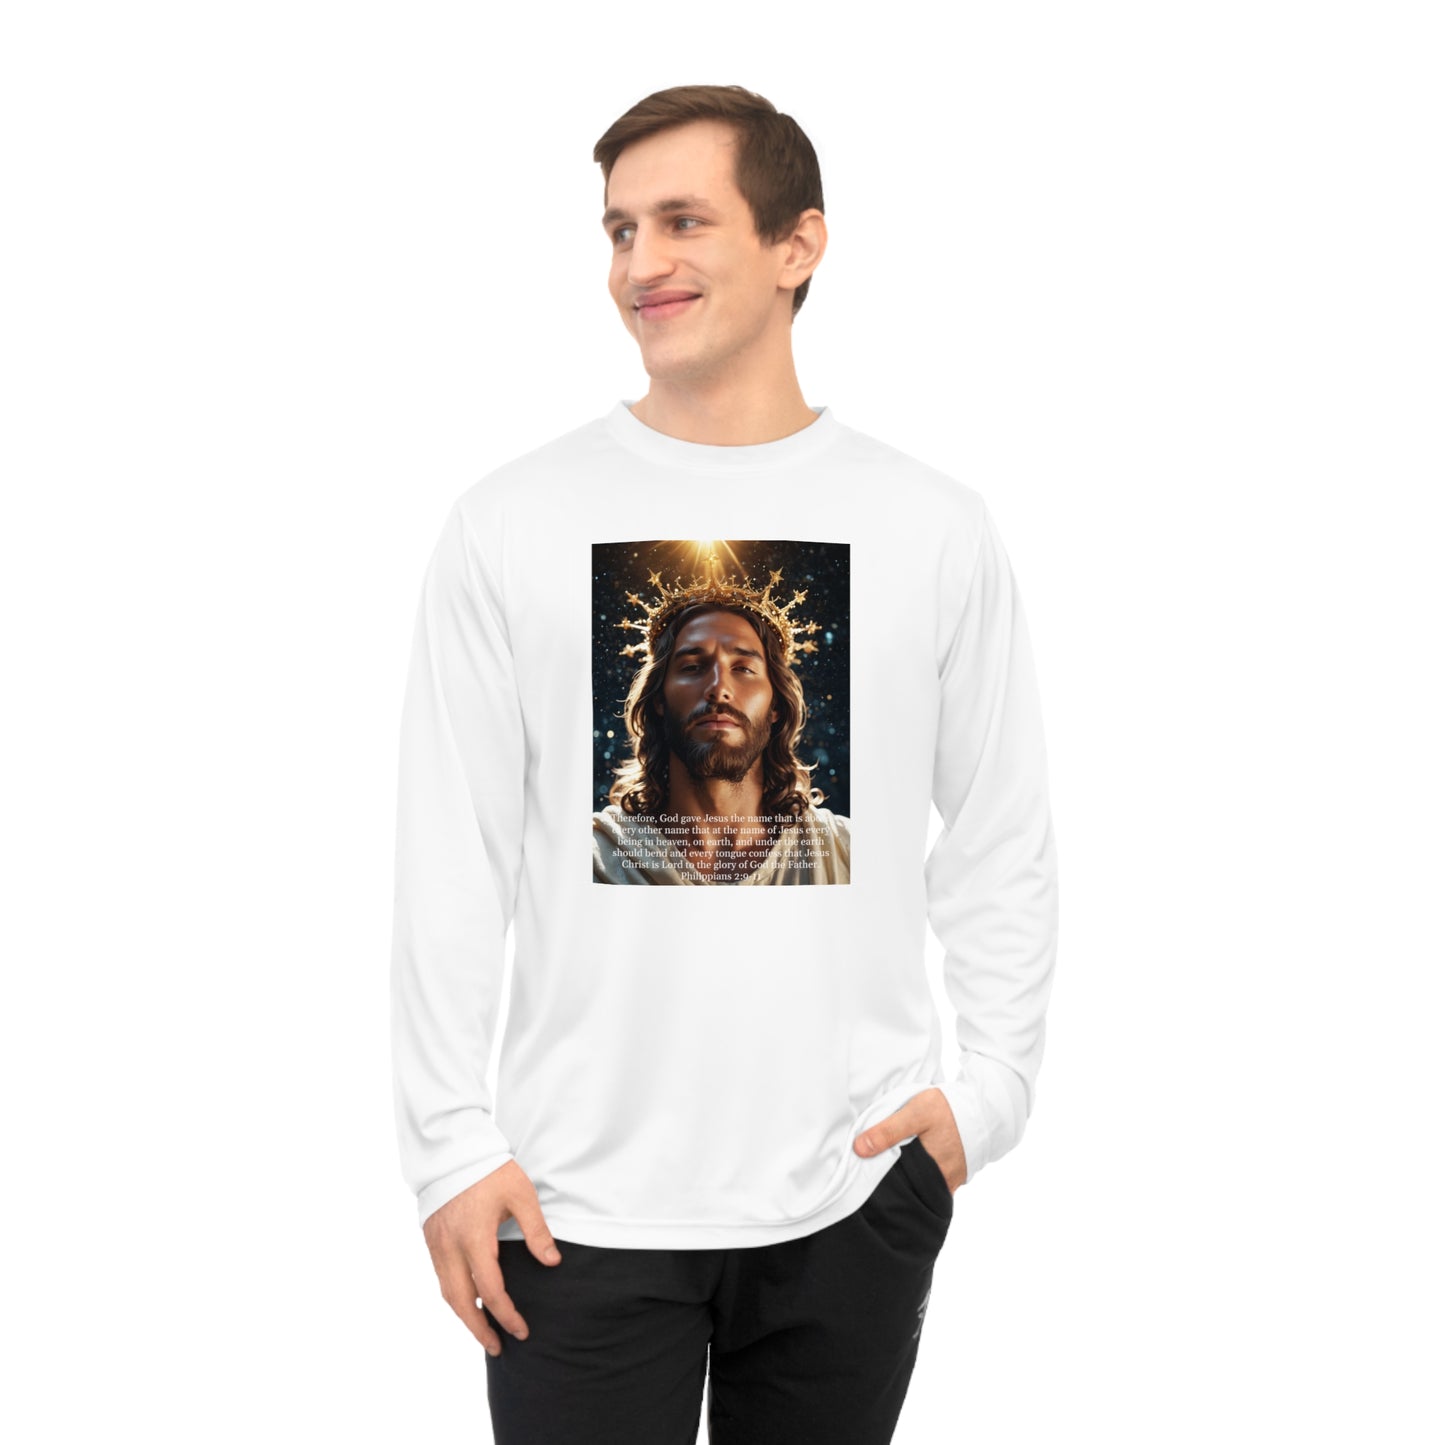 "Jesus Christ is Lord" Unisex Performance Long Sleeve Shirt